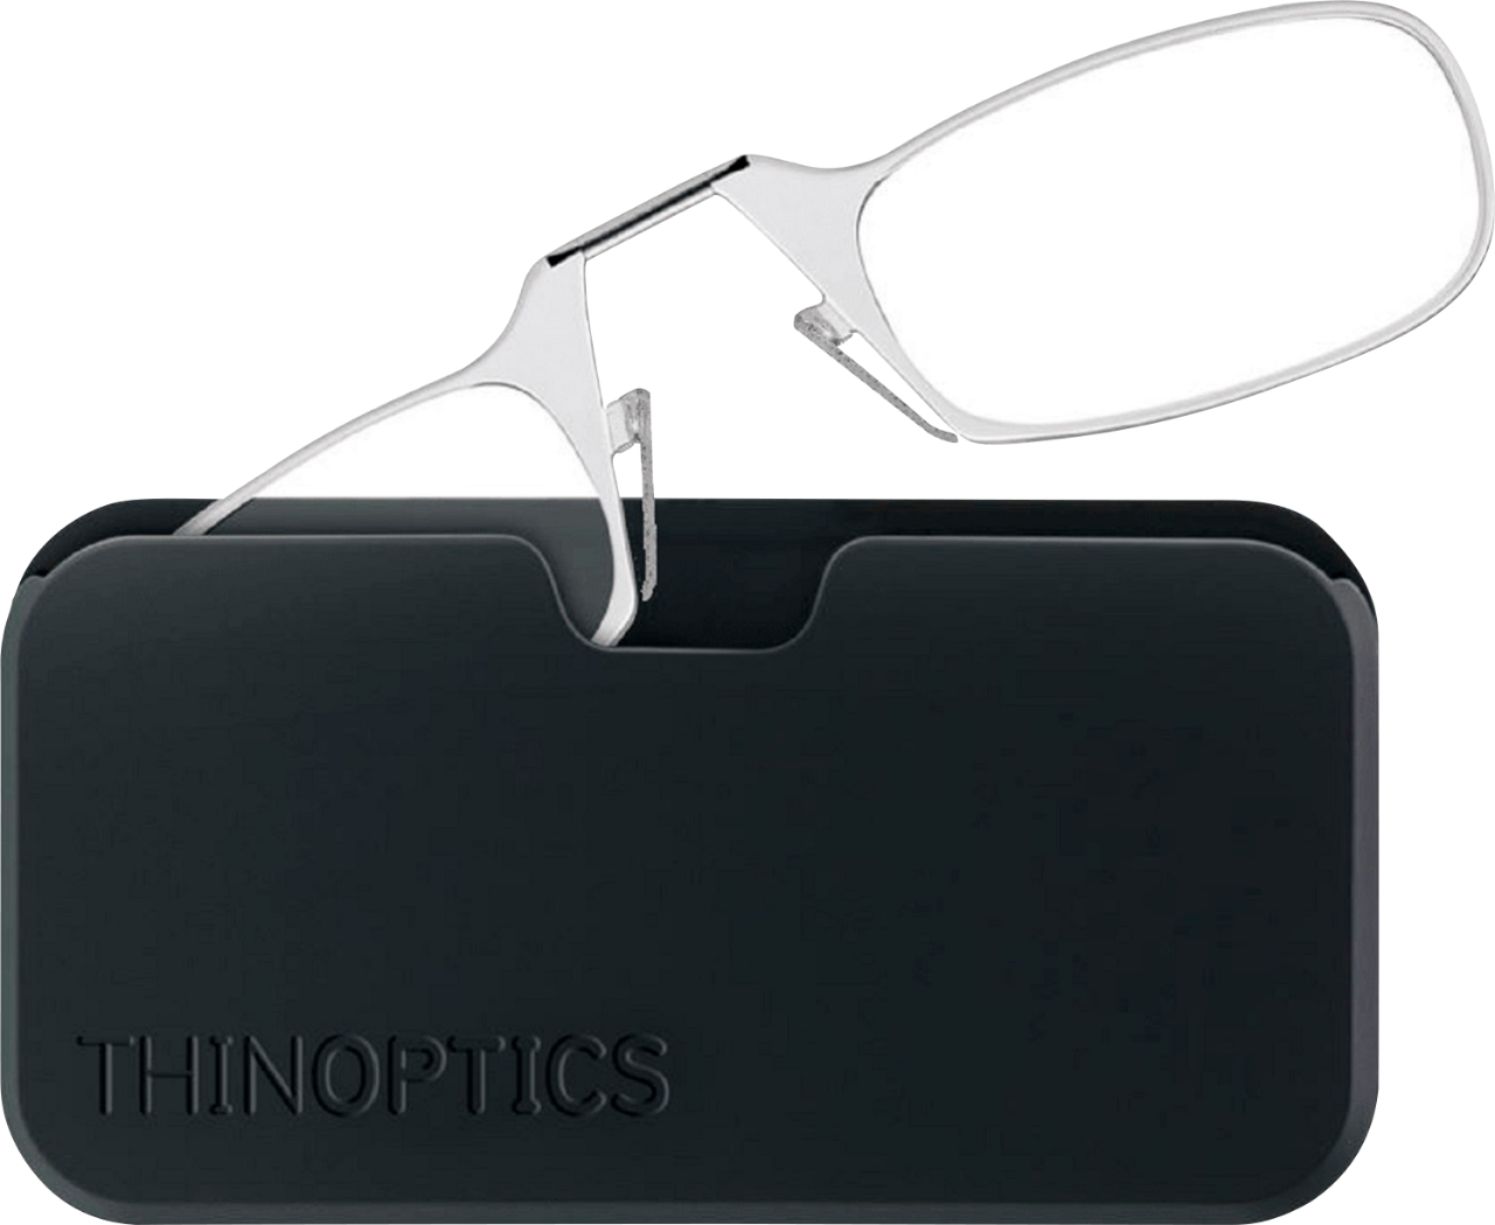 ThinOptics Headline 2.5 Strength Glasses with Universal Pod Clear